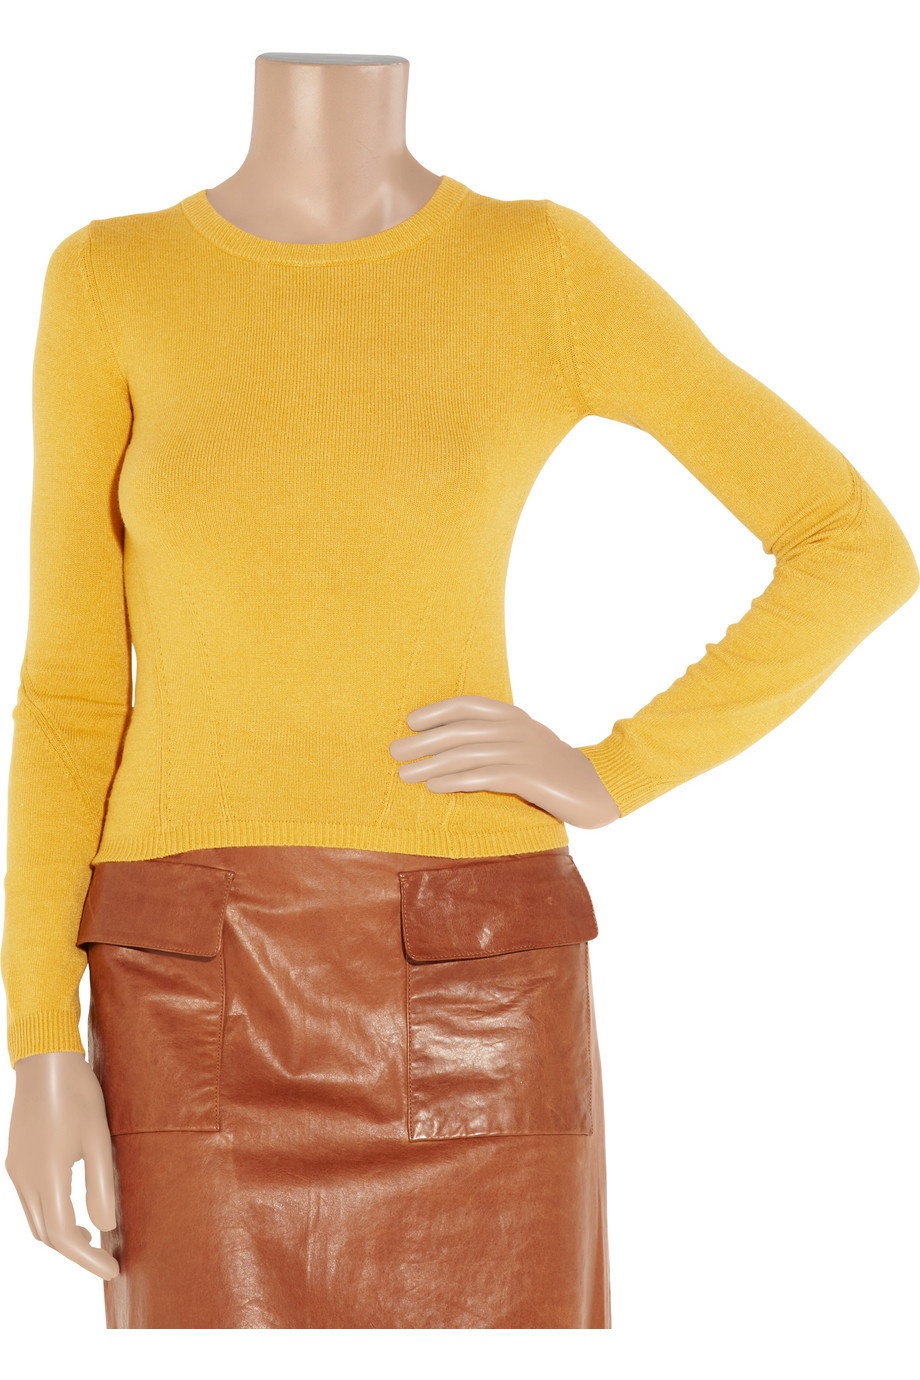 Желто-горчичный свитер MARC BY MARC JACOBS размер L